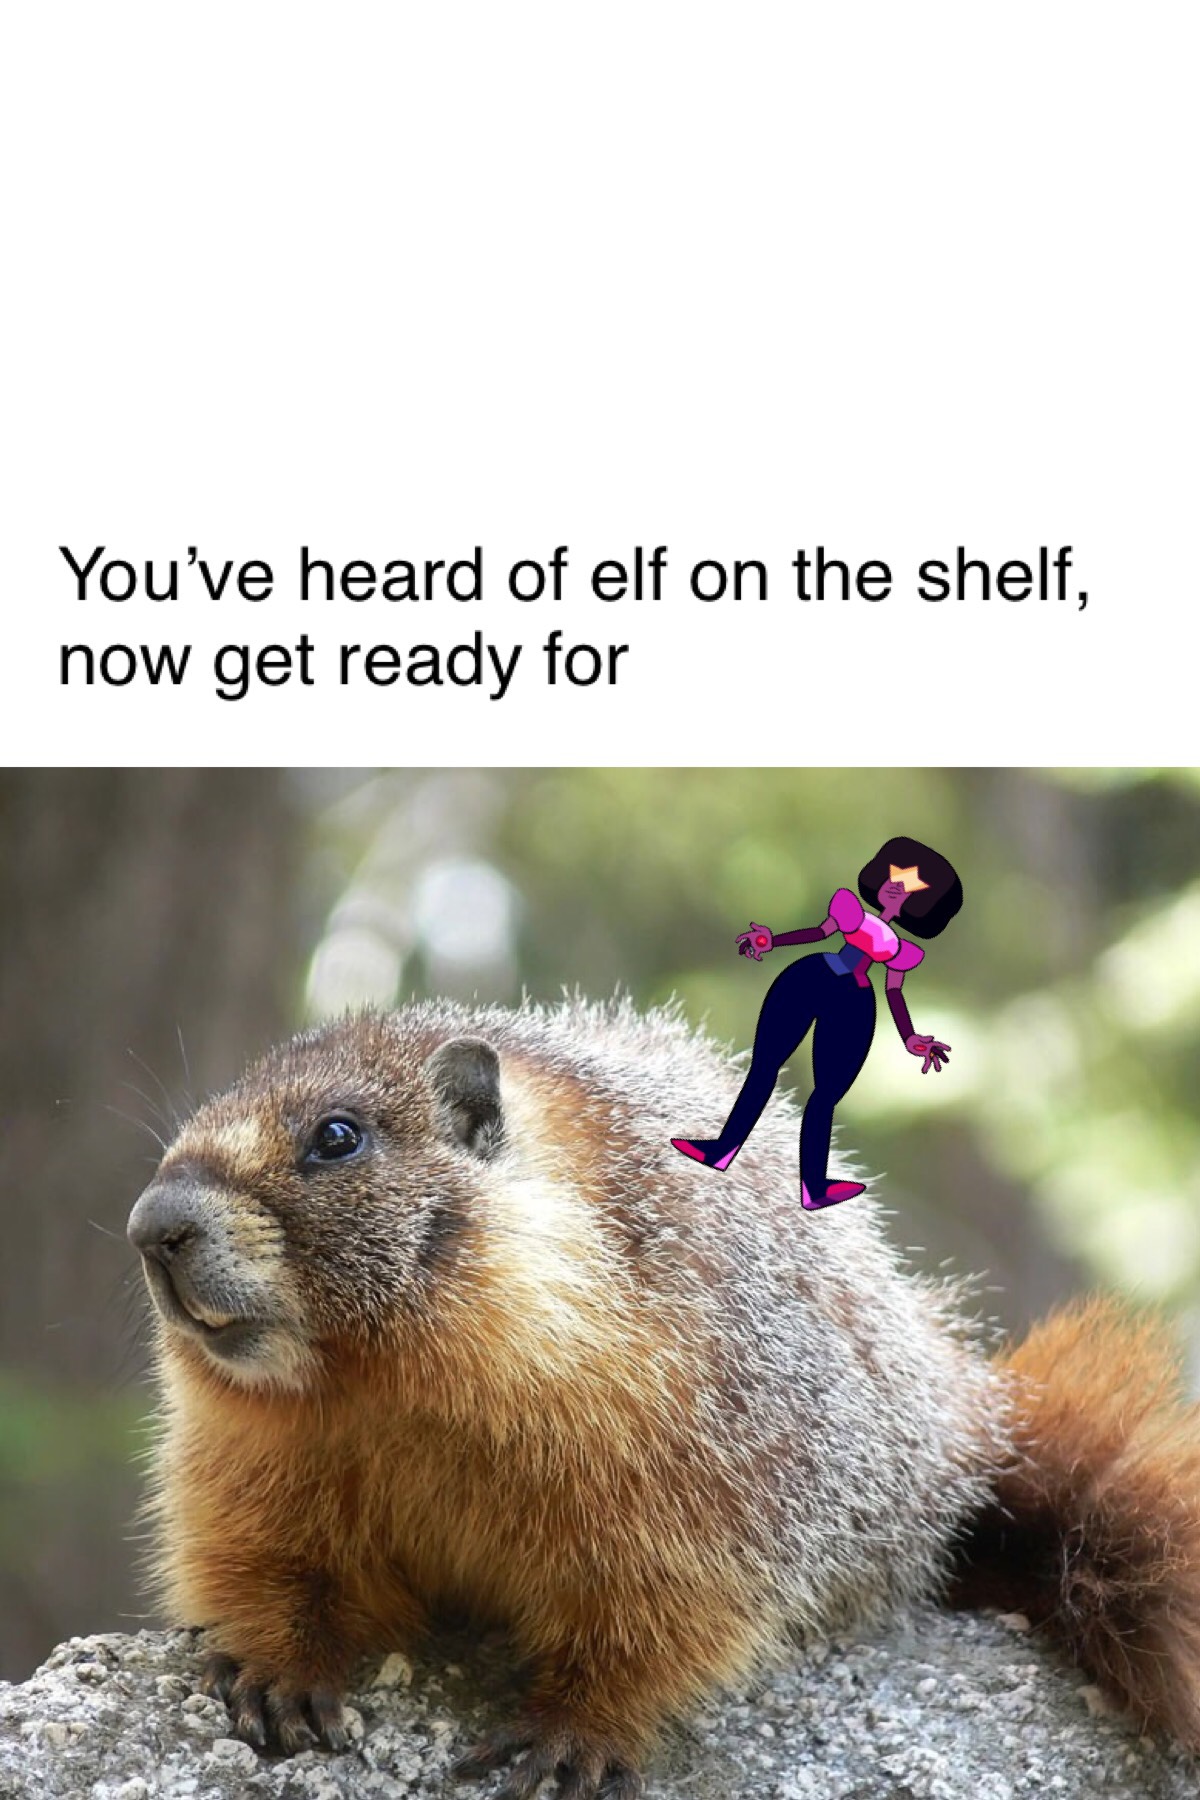 Garnet on the marmot